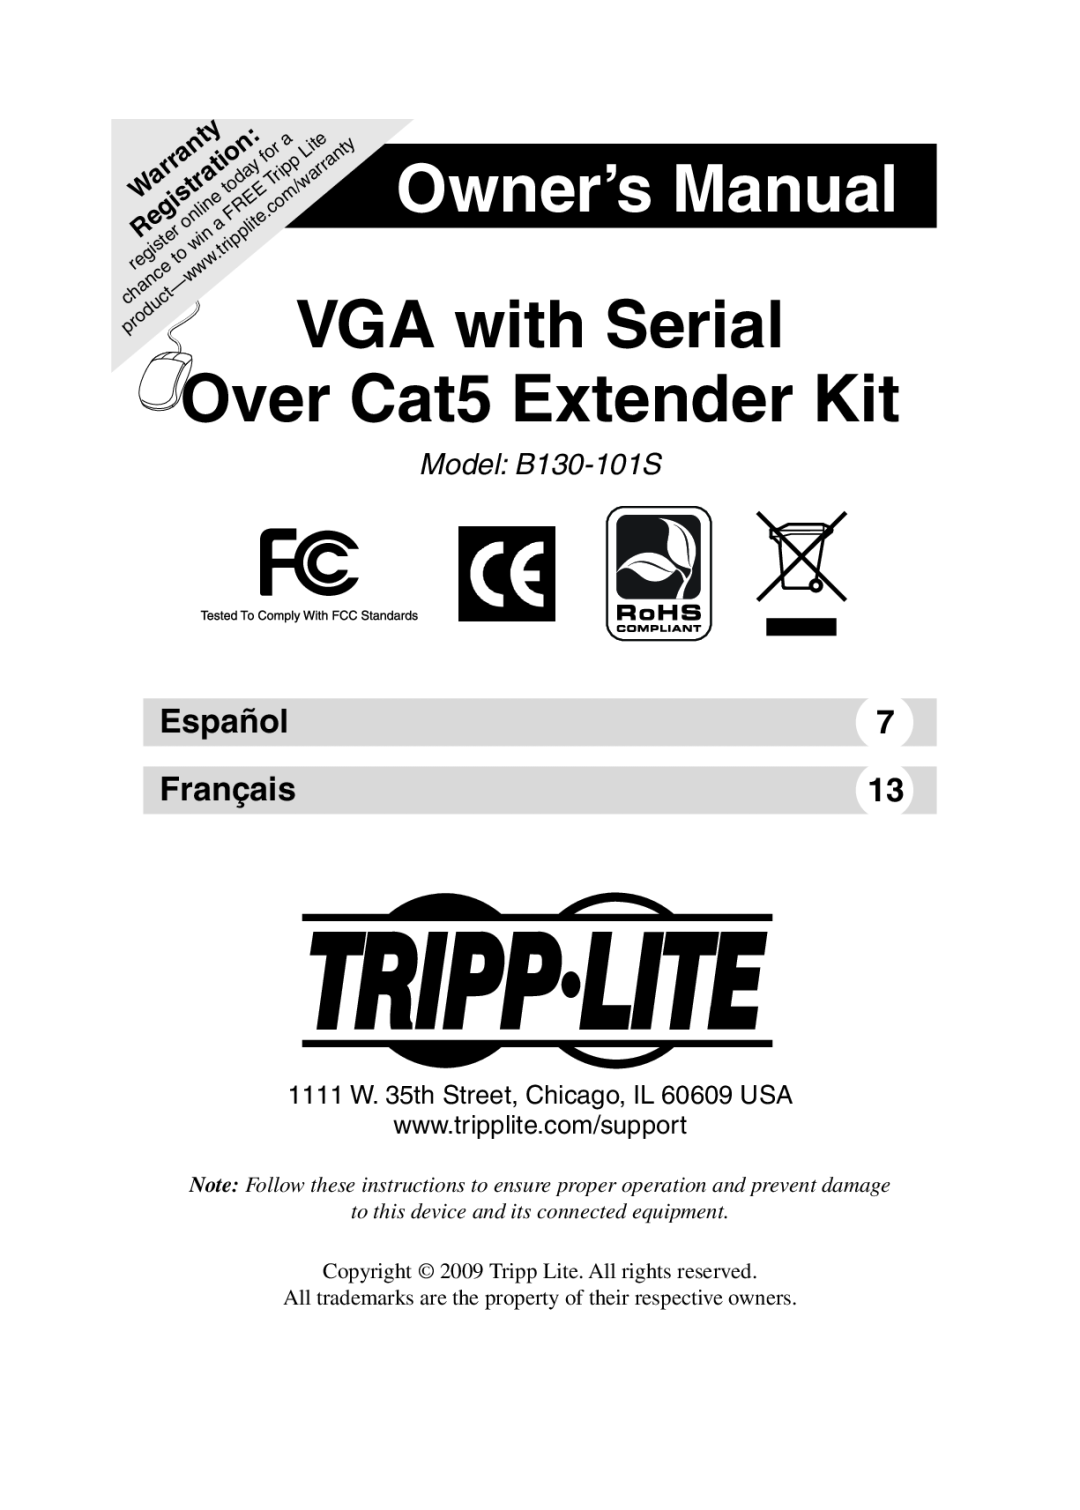 Tripp Lite B130-101S owner manual Owner’s Manual, VGA with Serial, Over Cat5 Extender Kit, Español, Français, Warranty 